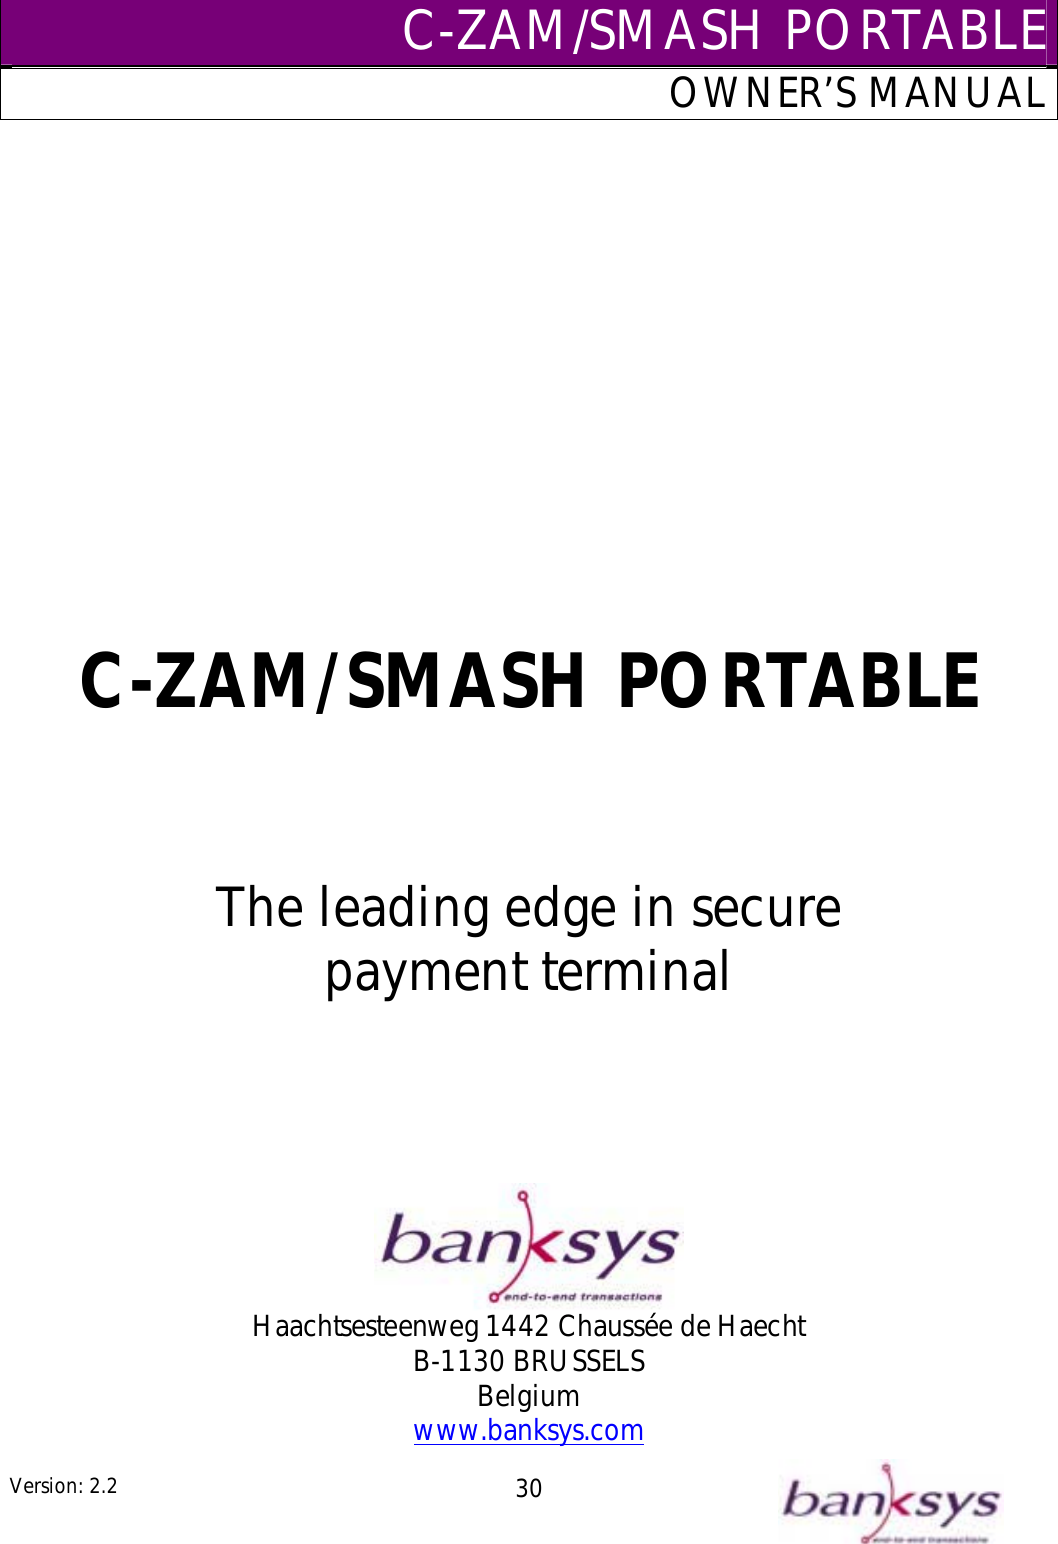 C-ZAM/SMASH PORTABLEOWNER’S MANUAL               C-ZAM/SMASH PORTABLE      The leading edge in secure payment terminal       Version: 2.2  30 Haachtsesteenweg 1442 Chaussée de Haecht B-1130 BRUSSELS Belgium www.banksys.com 